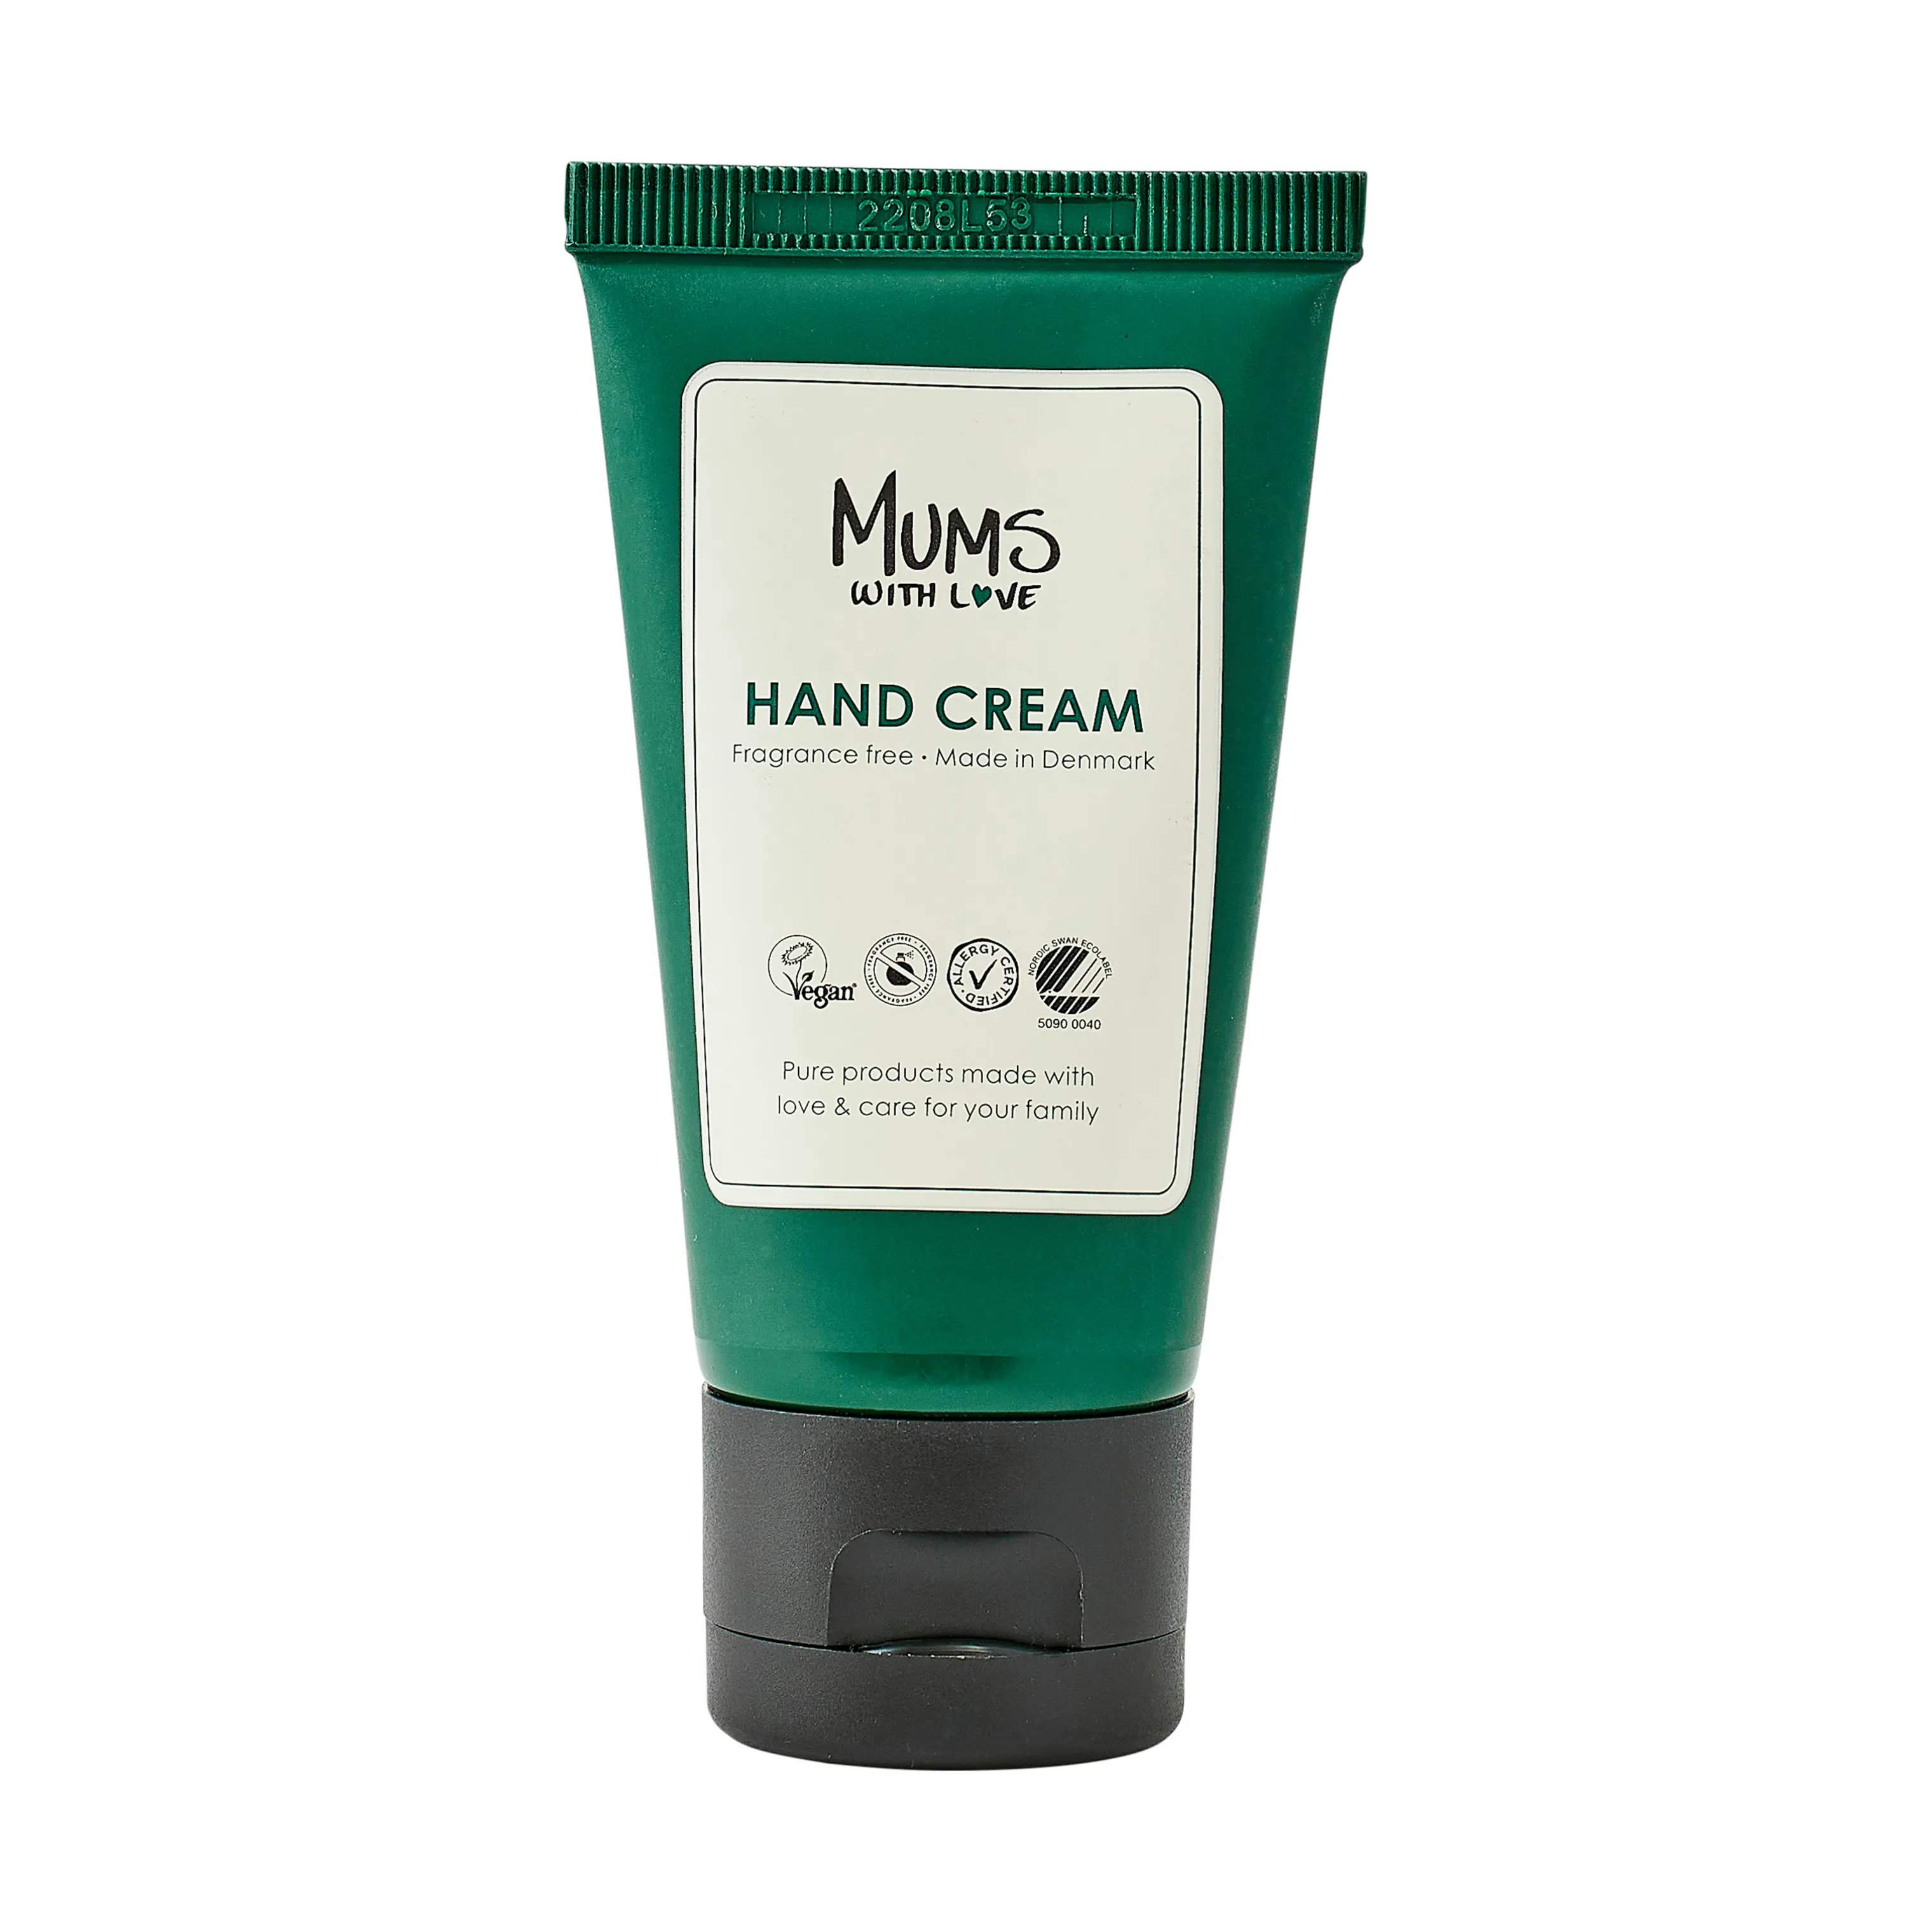 Hand Cream, klar, large